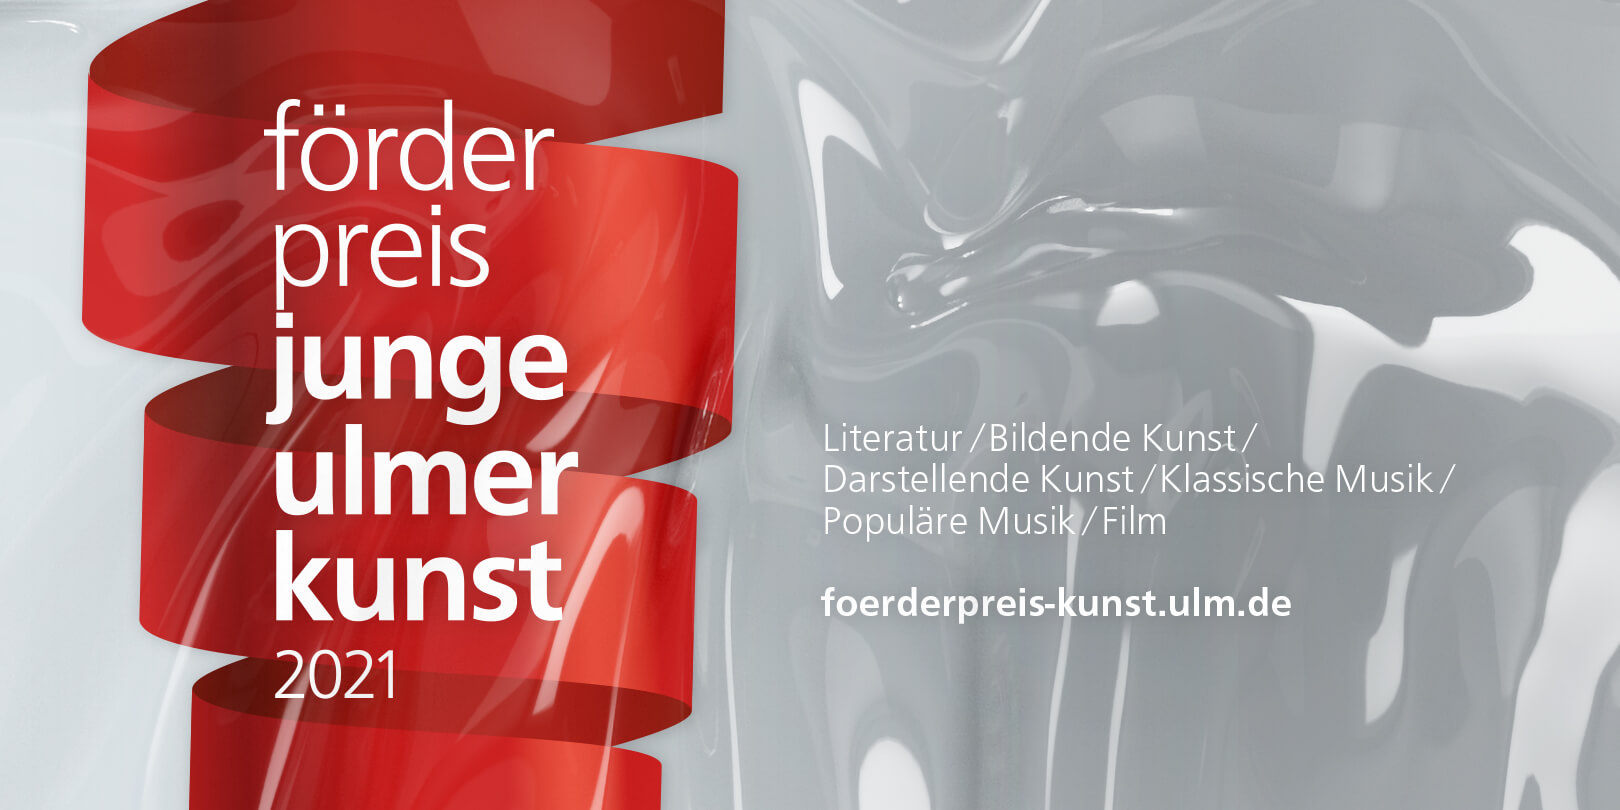 Förderpreis Junge Ulmer Kunst 2021, rote Spirale, Logo